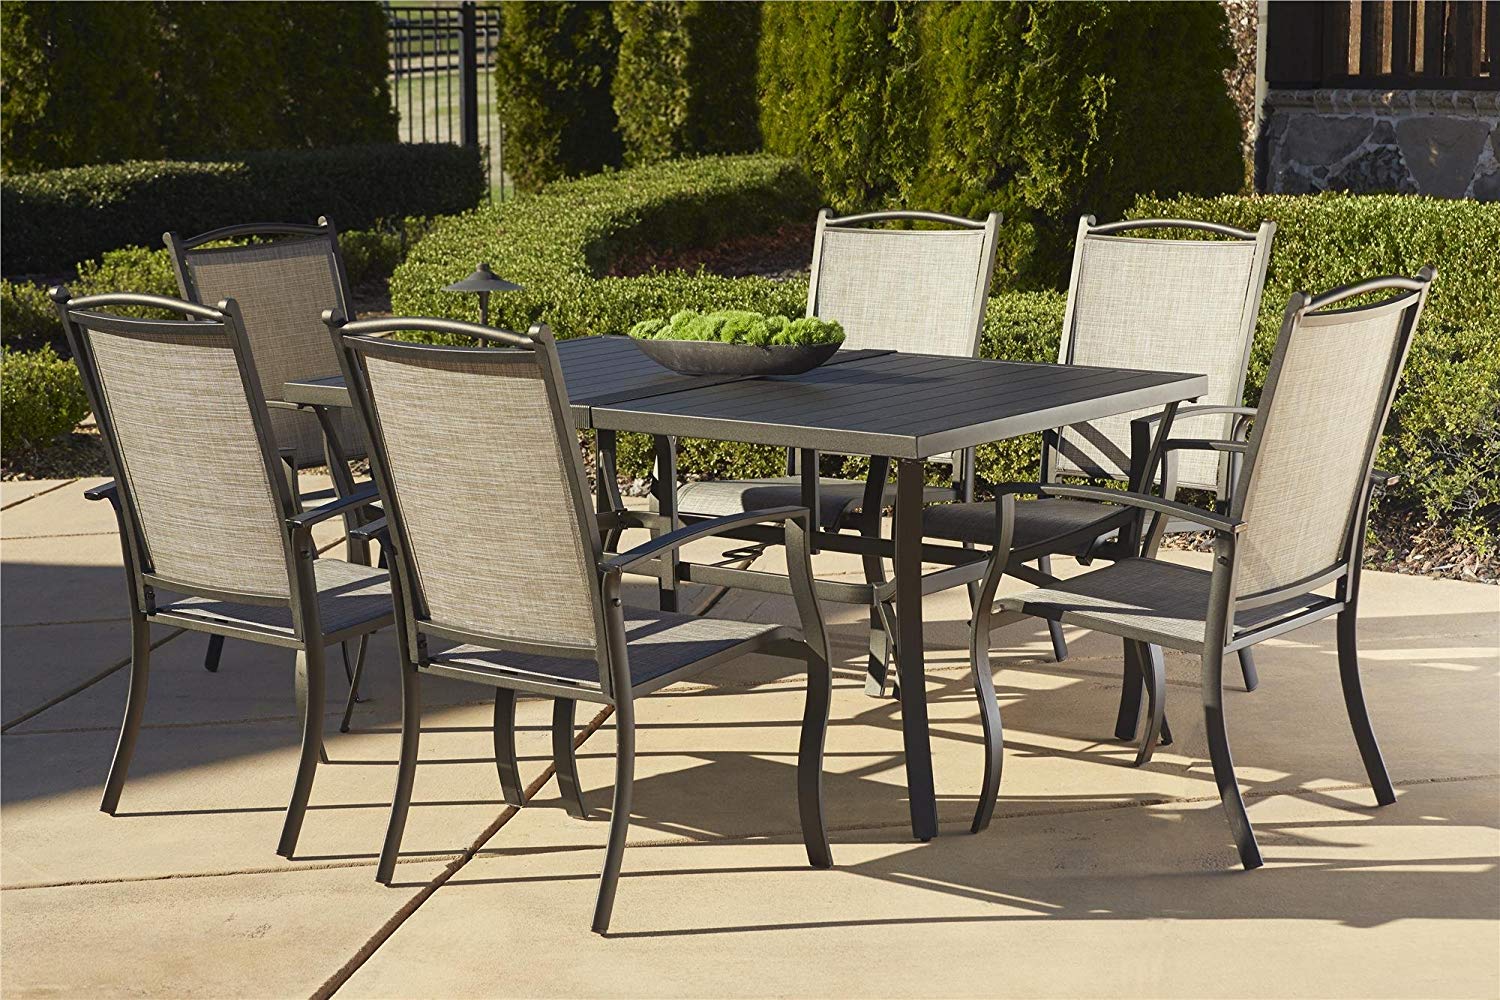 outdoor dining sets amazon.com: cosco outdoor 7 piece serene ridge aluminum patio dining set, RTGEVOJ